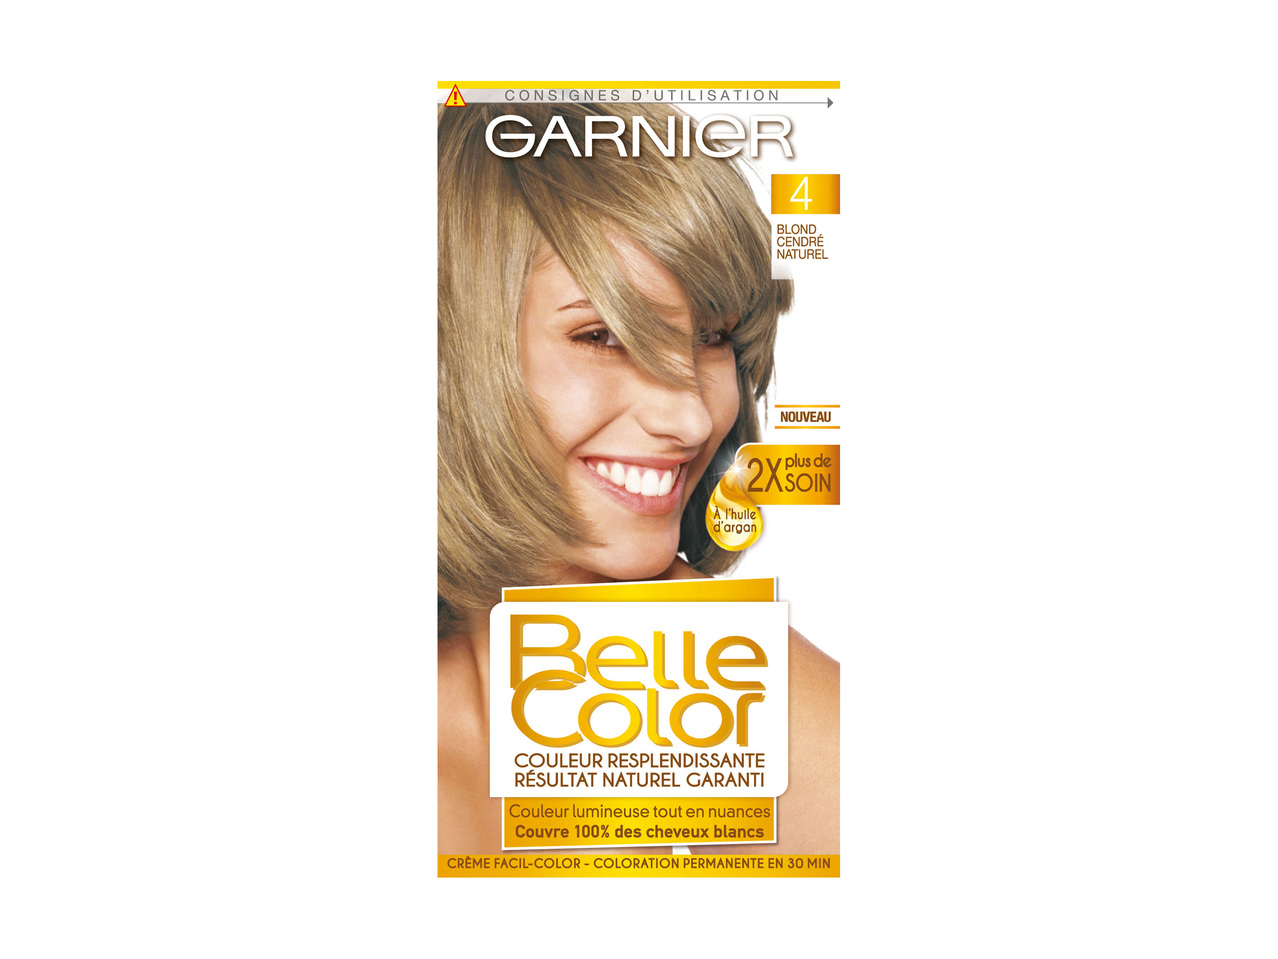 Garnier Belle Color coloration